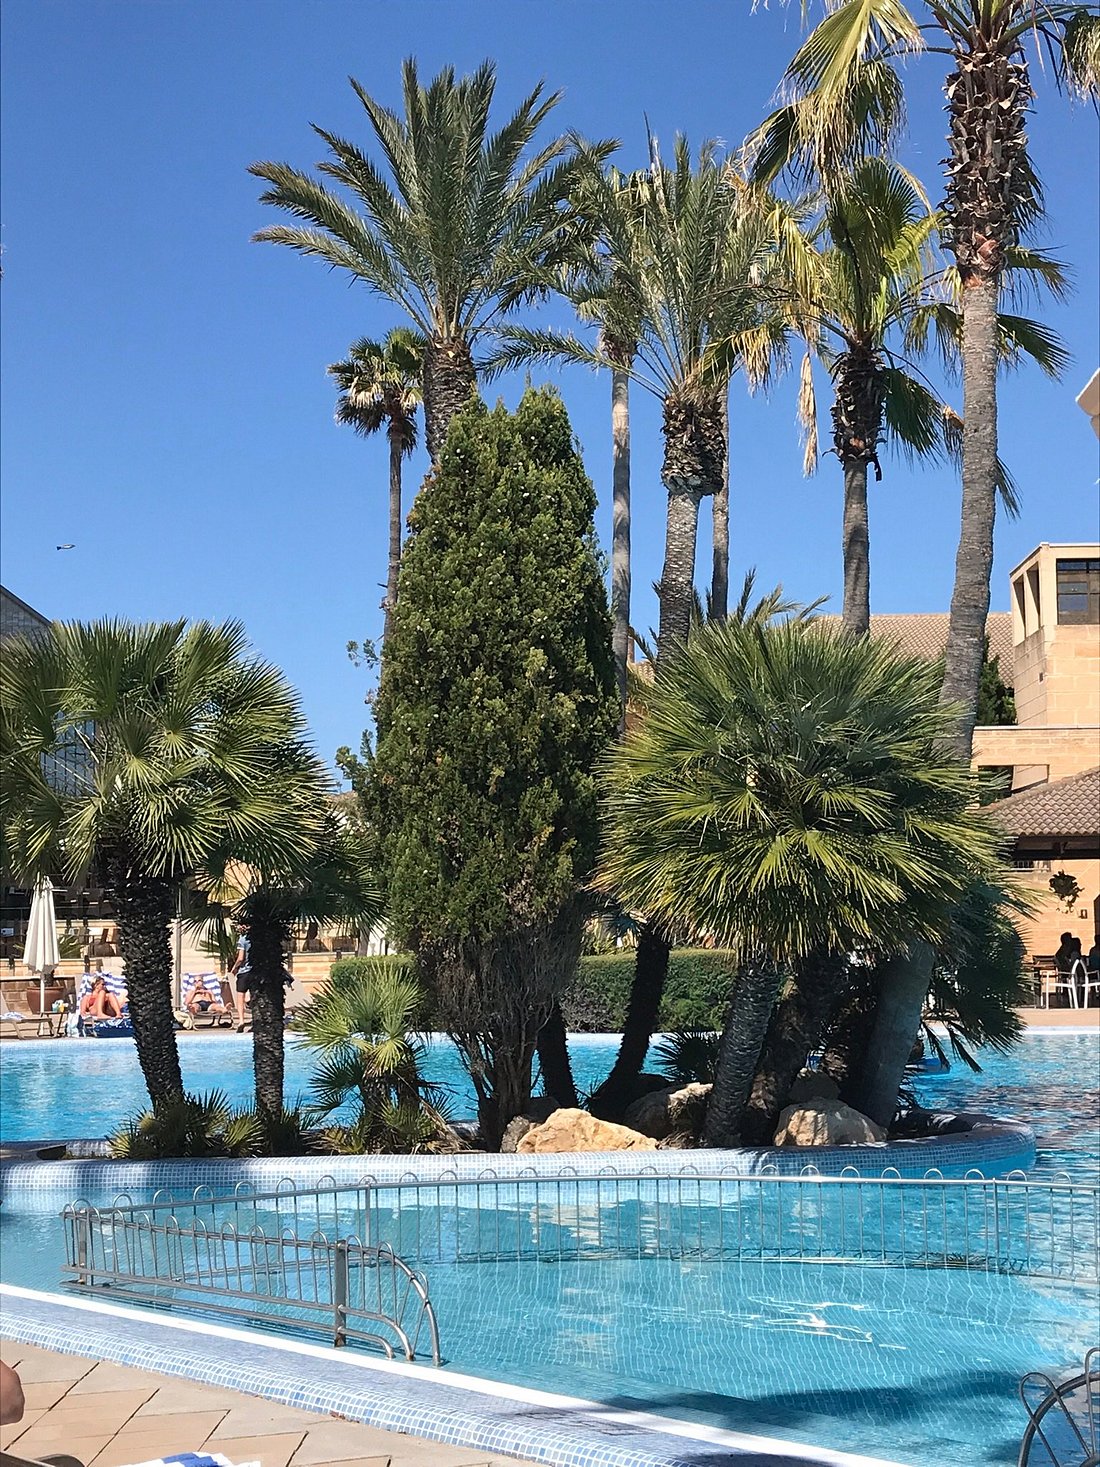 PortBlue Club Pollentia Resort & Spa Pool Pictures & Reviews - Tripadvisor